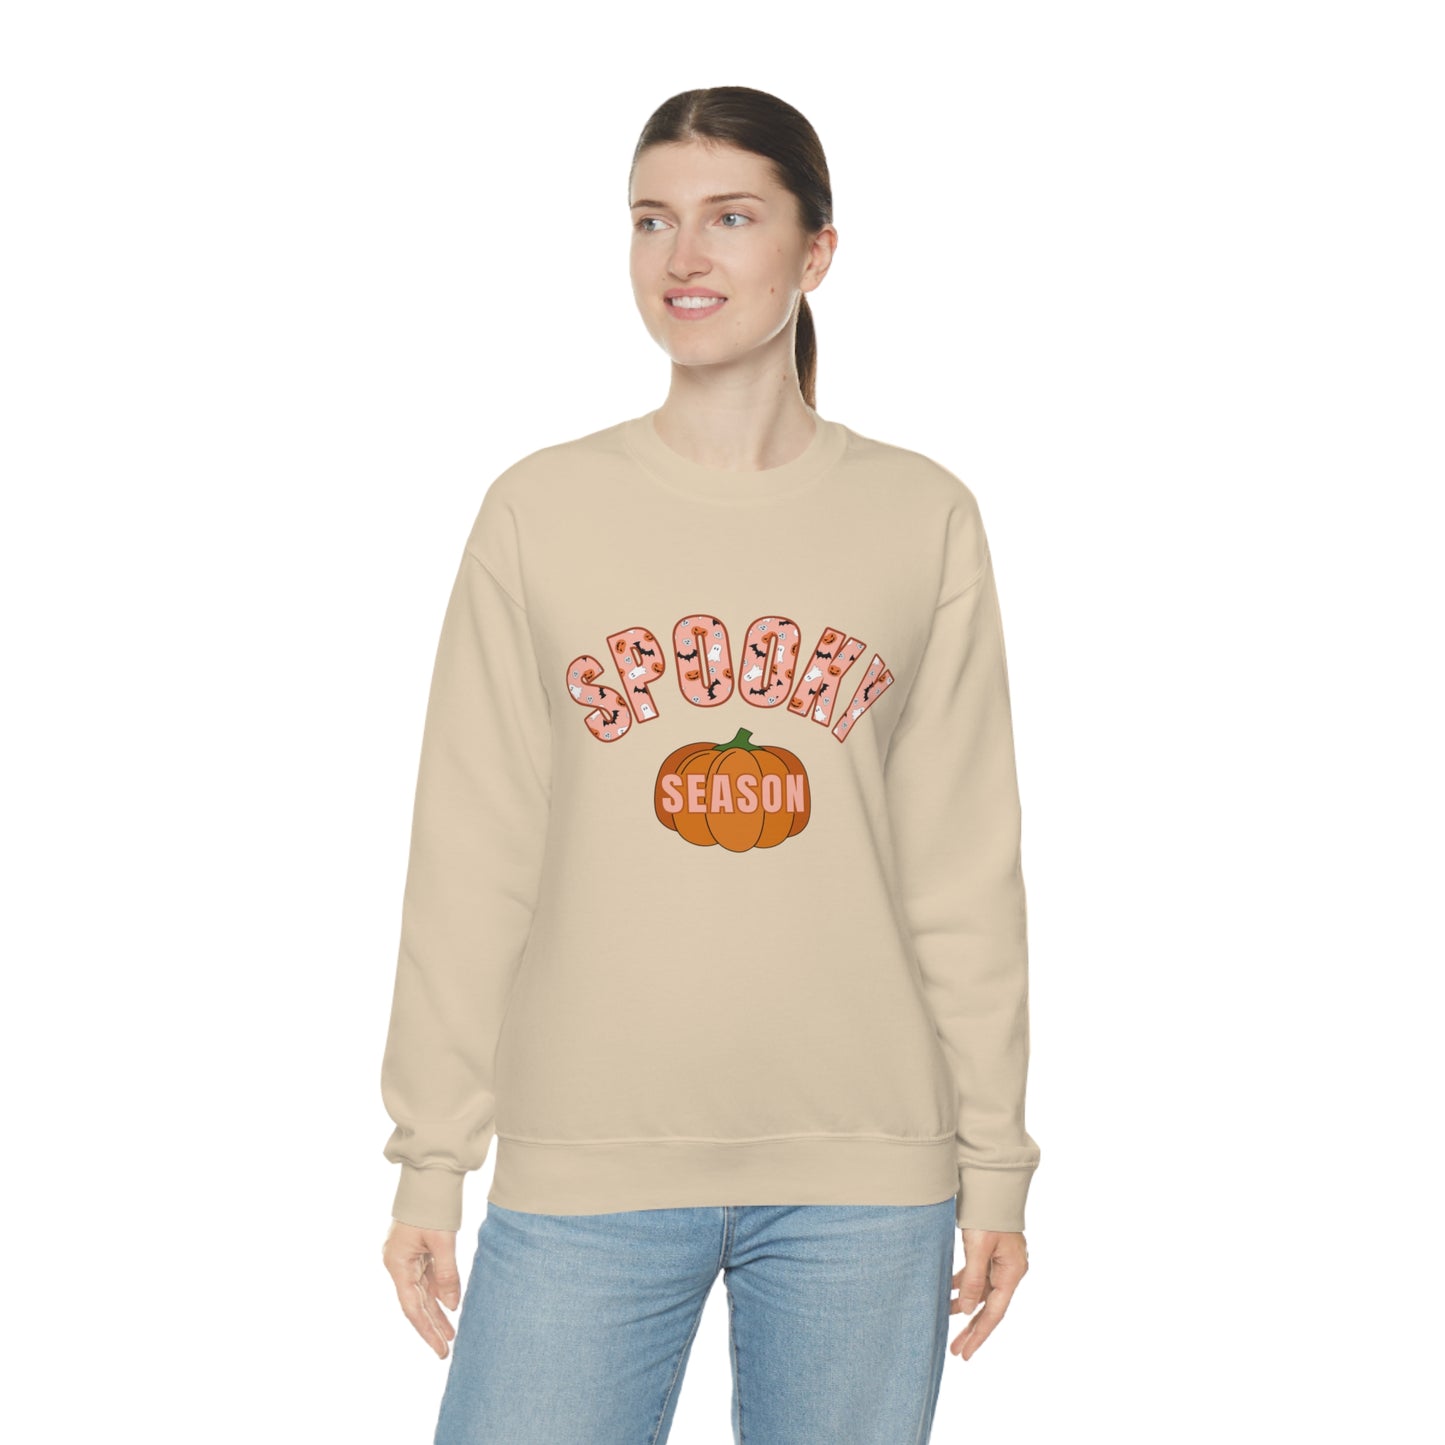 Halloween Sweatshirt, Spooky Season Pumpkin tshirt,  Halloween Sweater weather, Cool Shirt with pumpkin design, Fall Tee gift for Her - Teez Closet